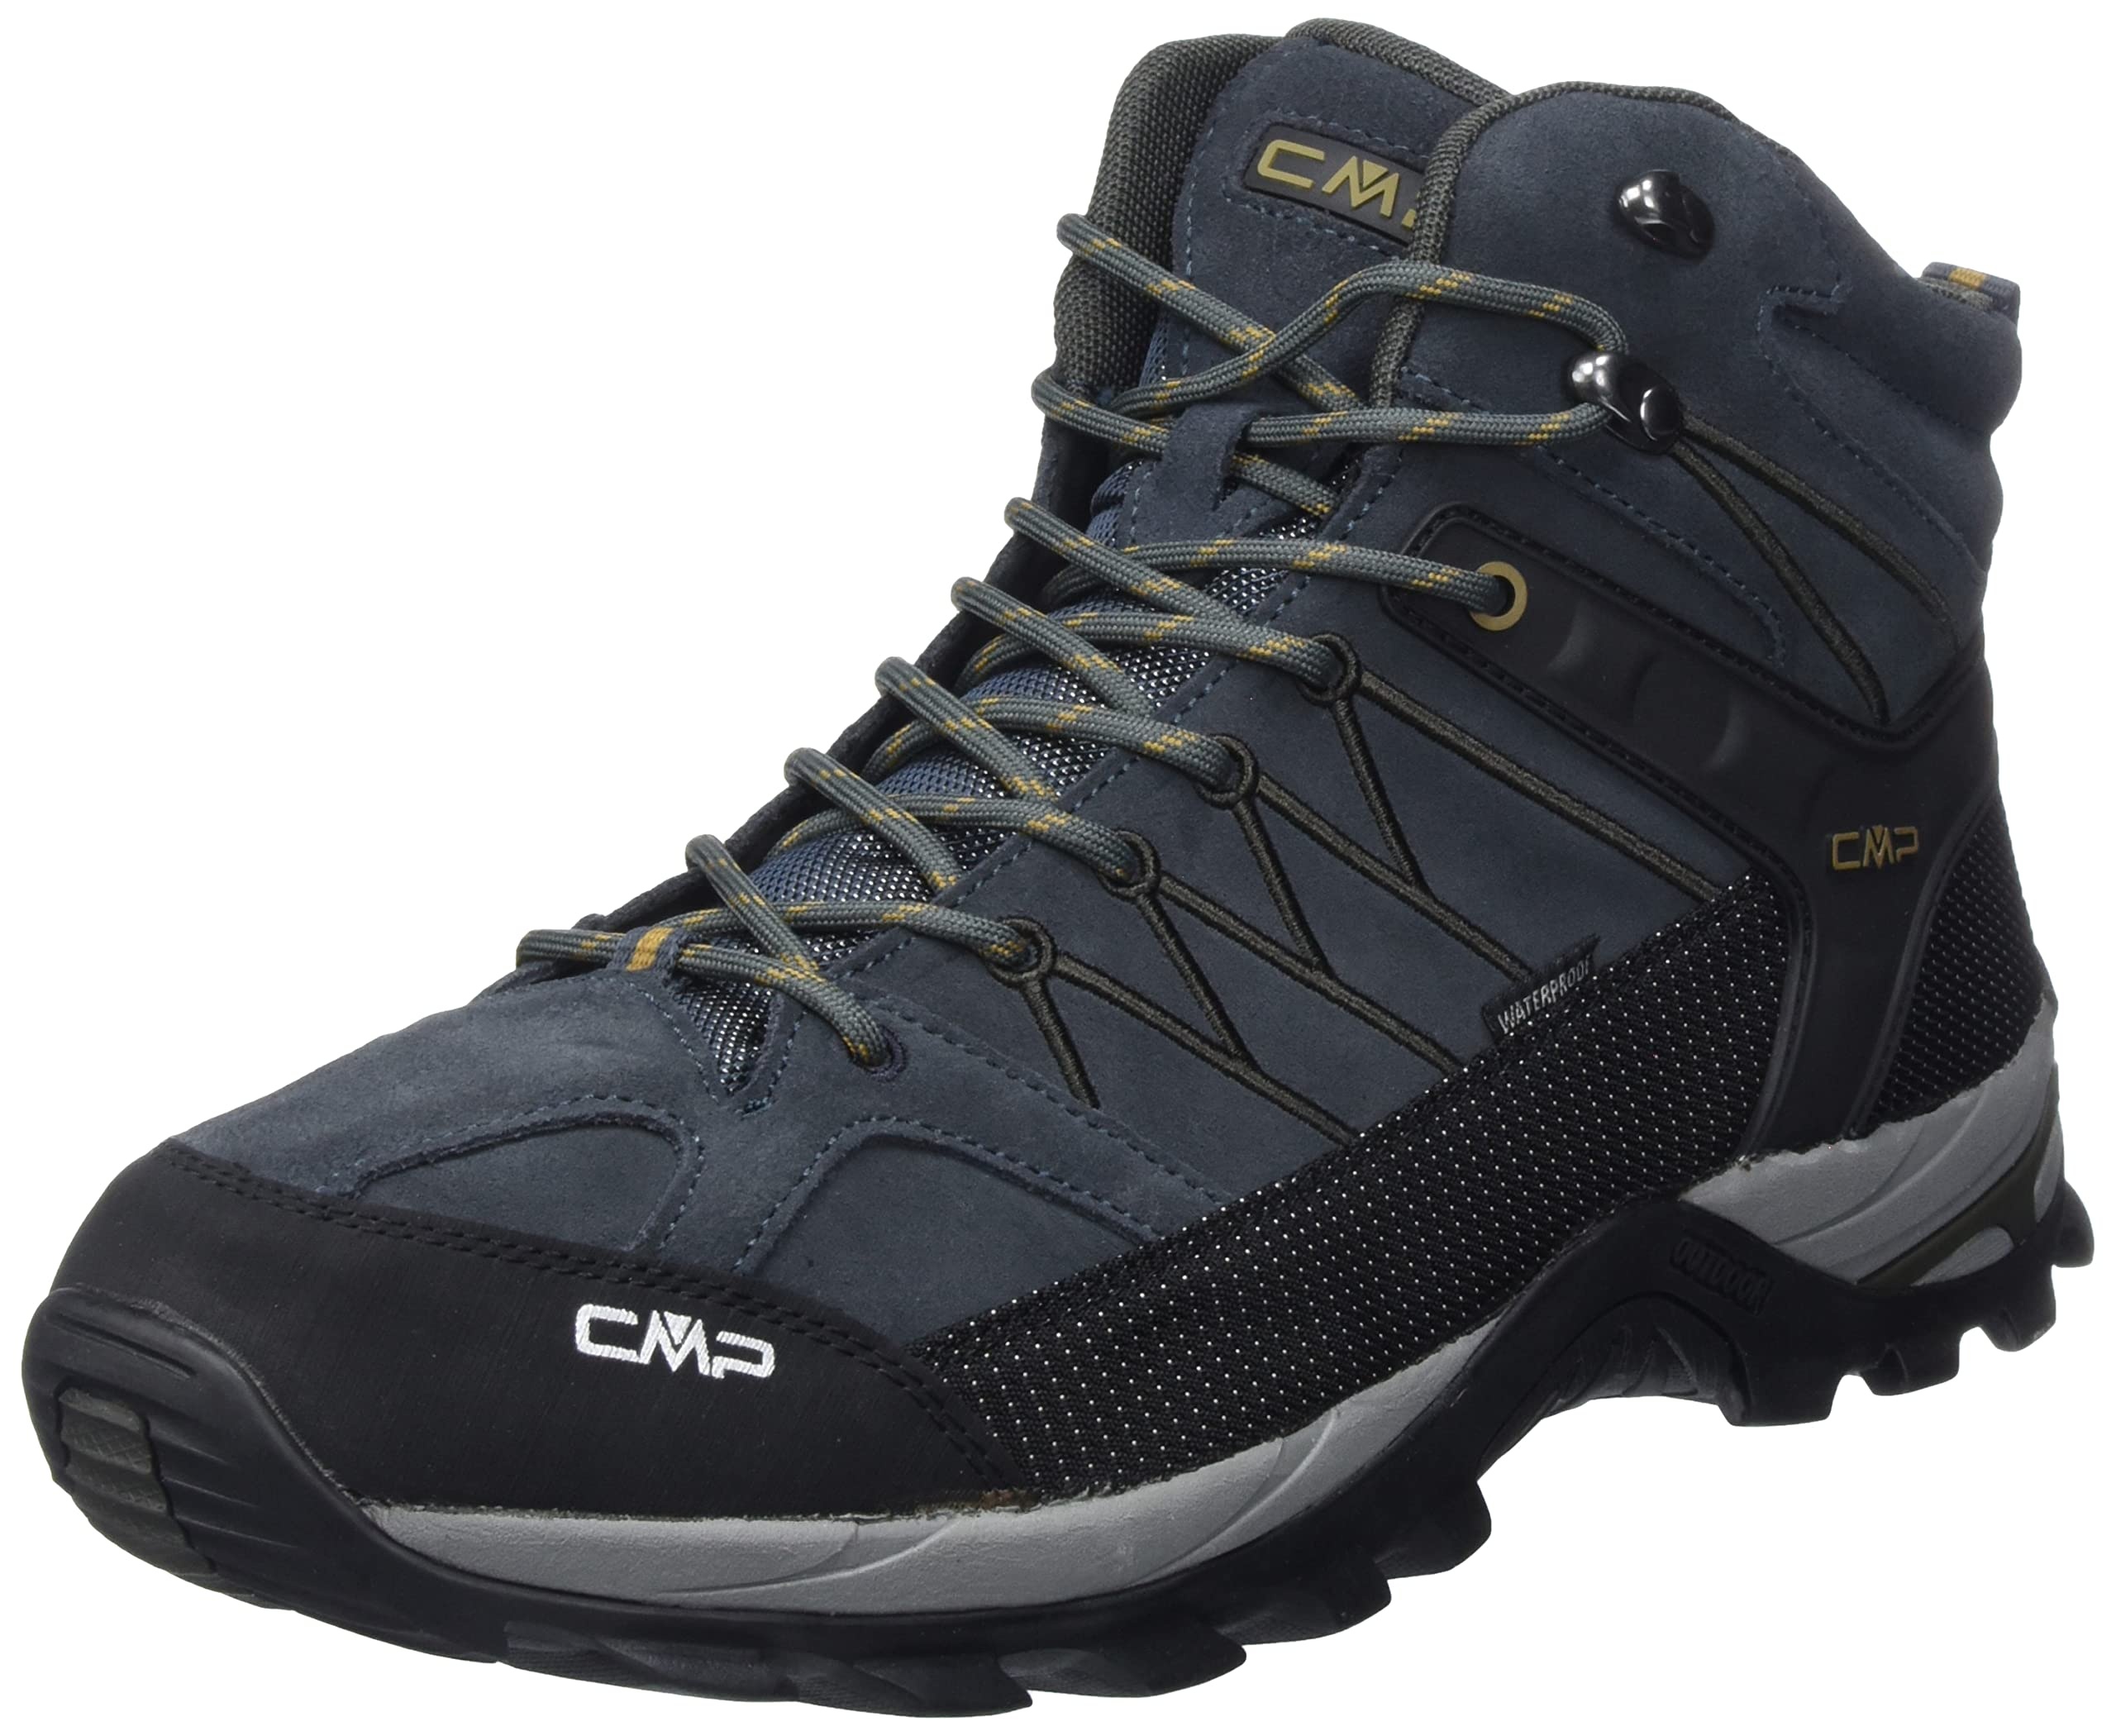 CMP - Rigel Mid Trekking Shoe Wp, Antracite-Arabica, 48